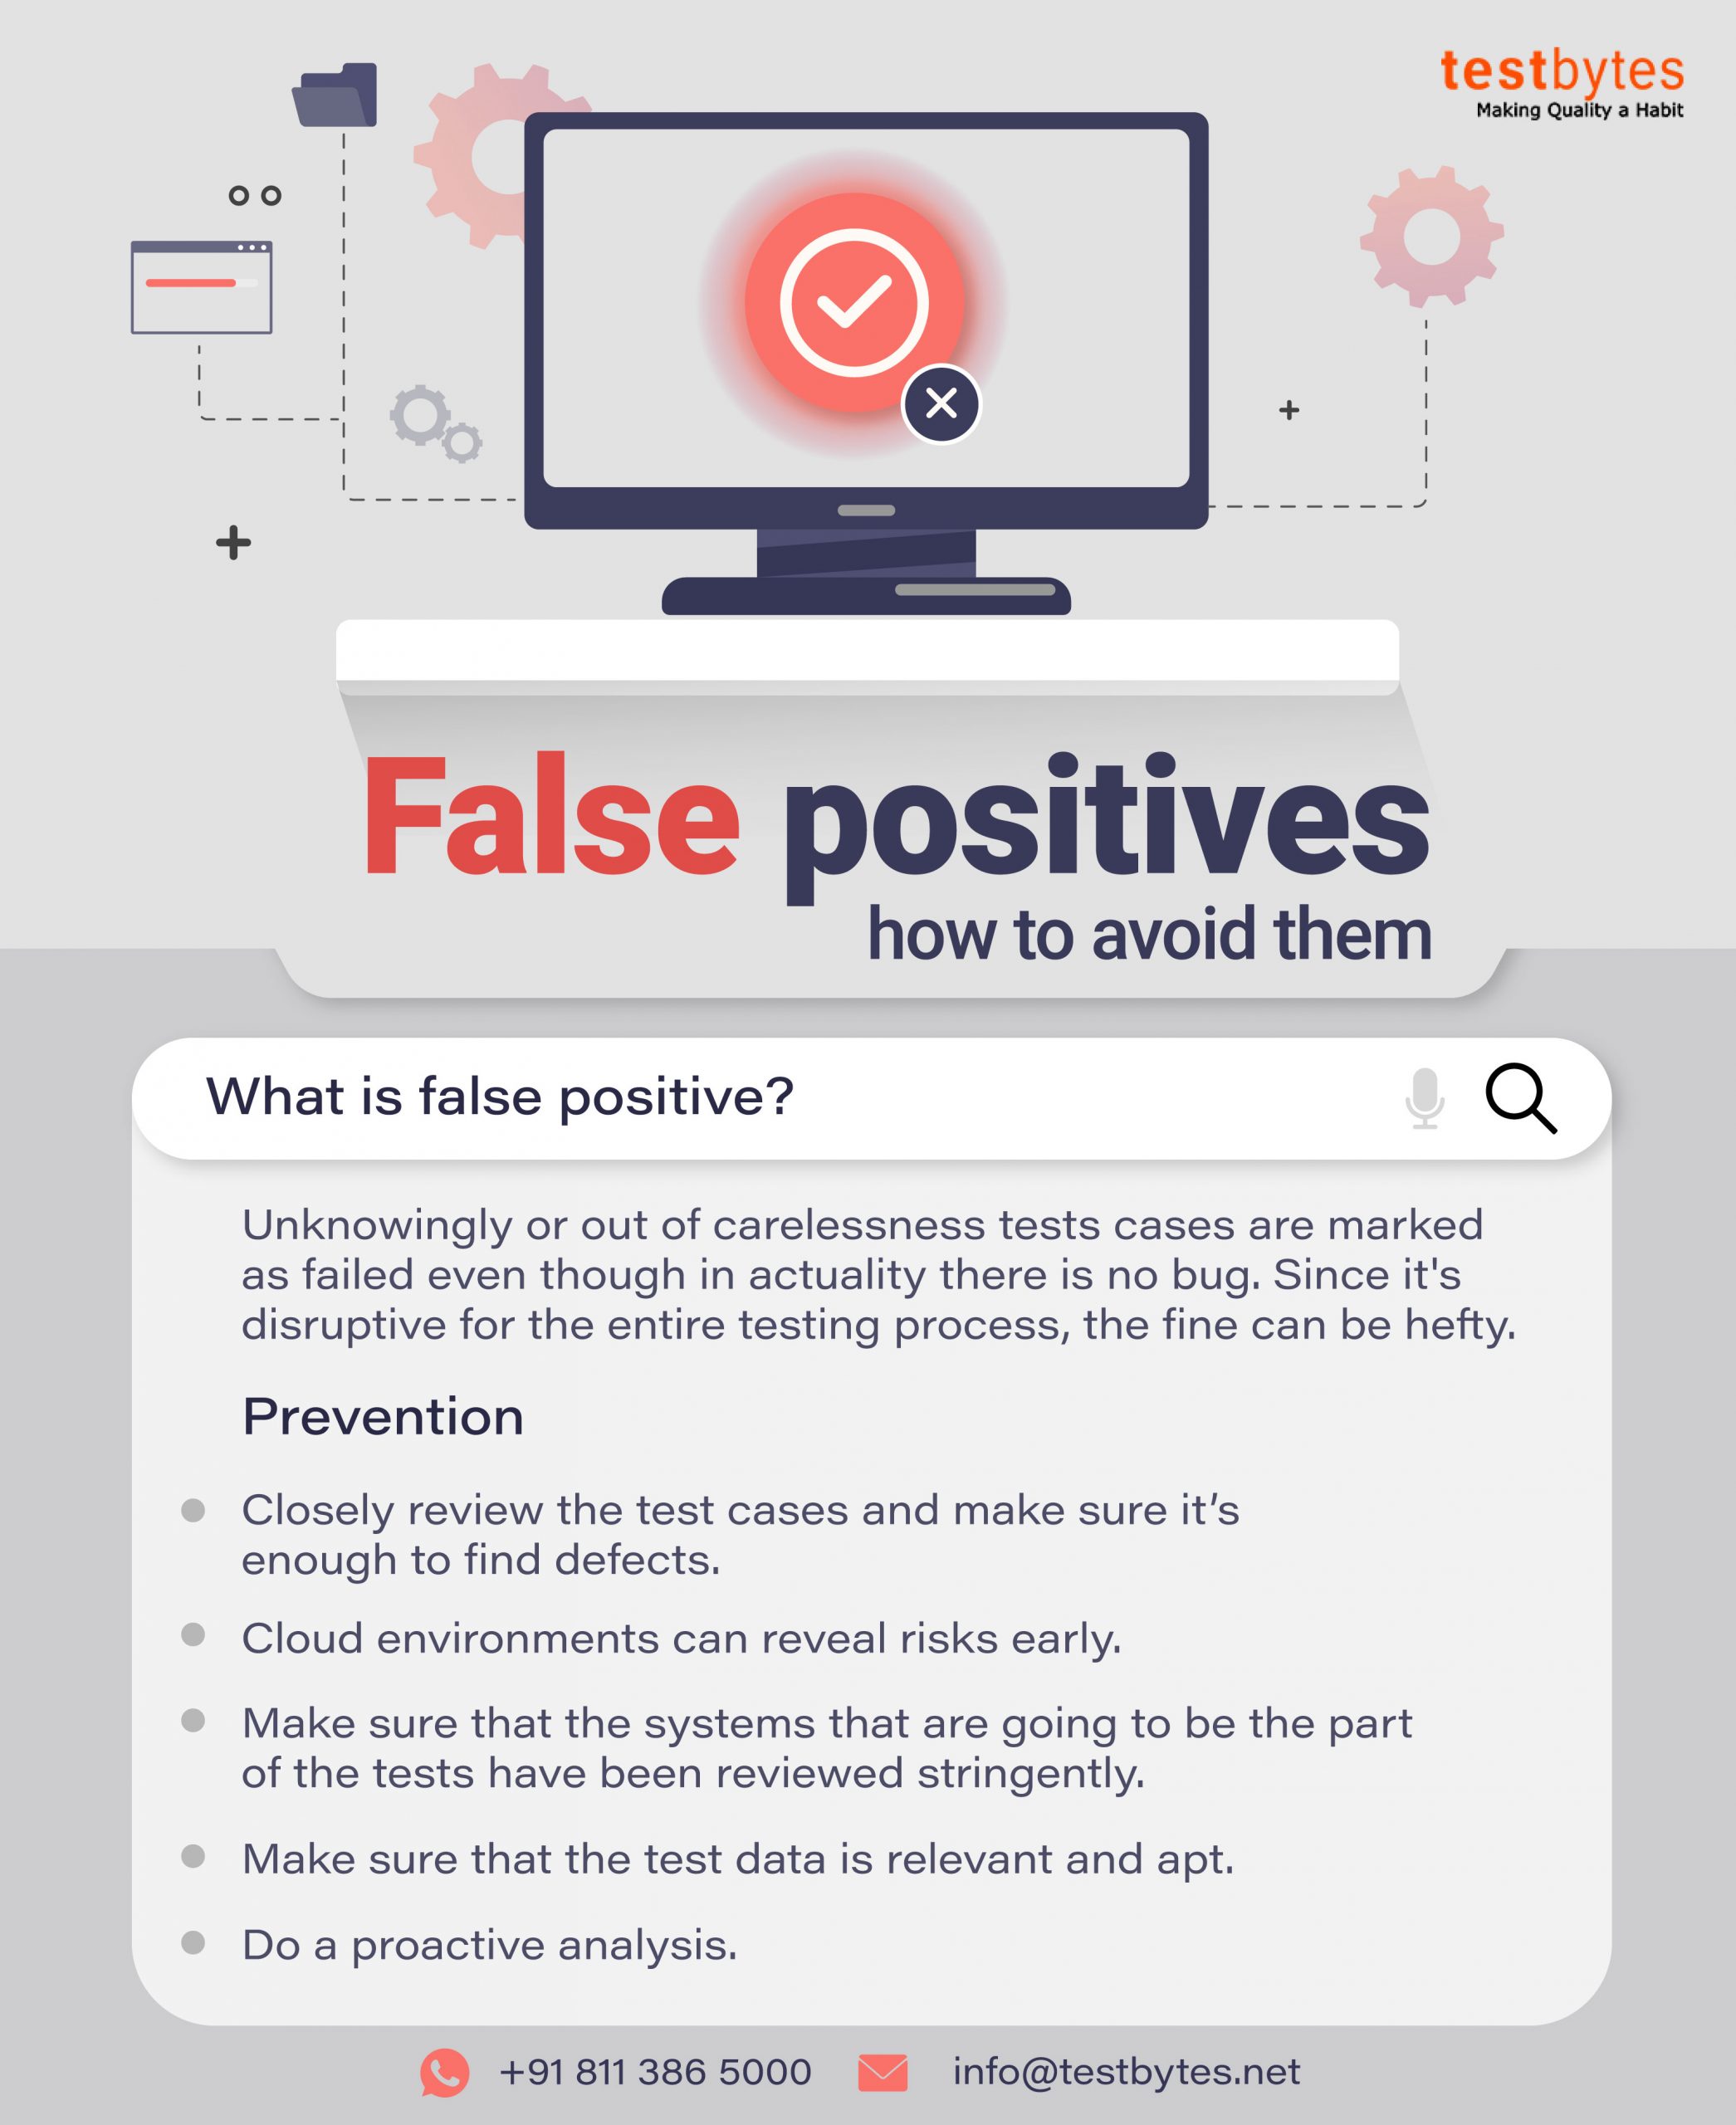 What is false positive?